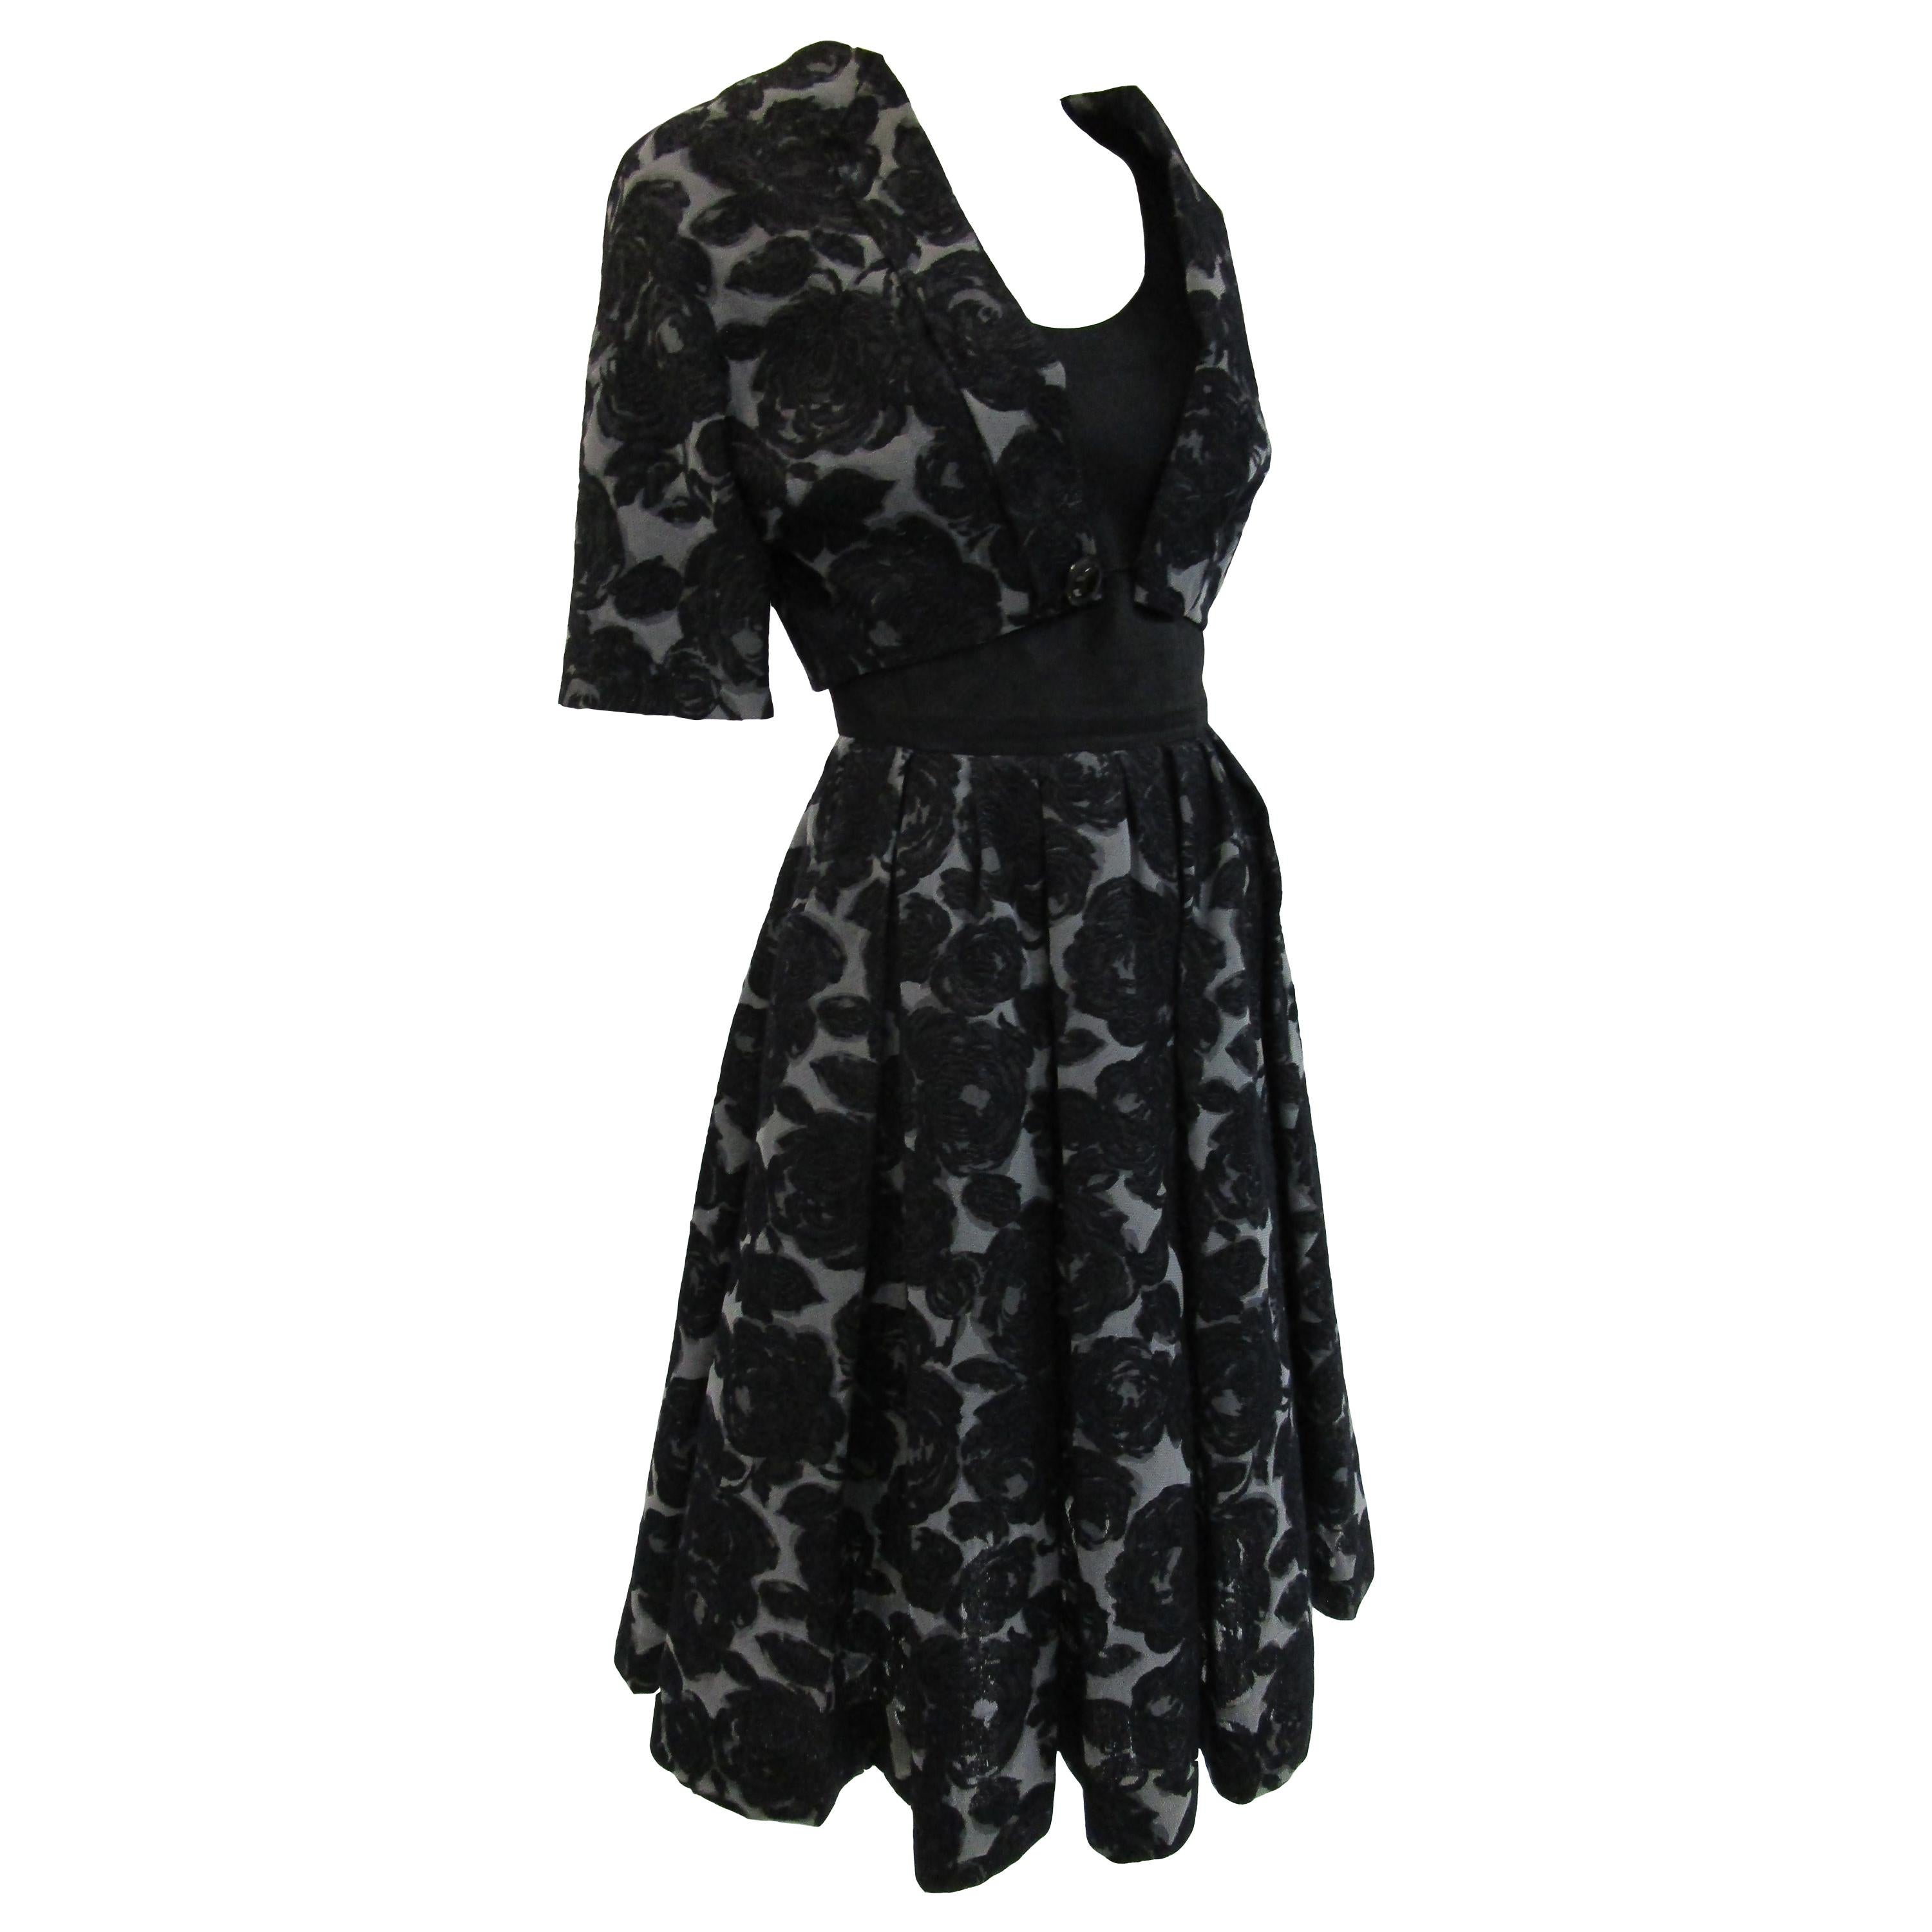 Rare 1950s Madame Gres licensed Black & Grey Embroidered Dress w/ Bolero Jacket For Sale